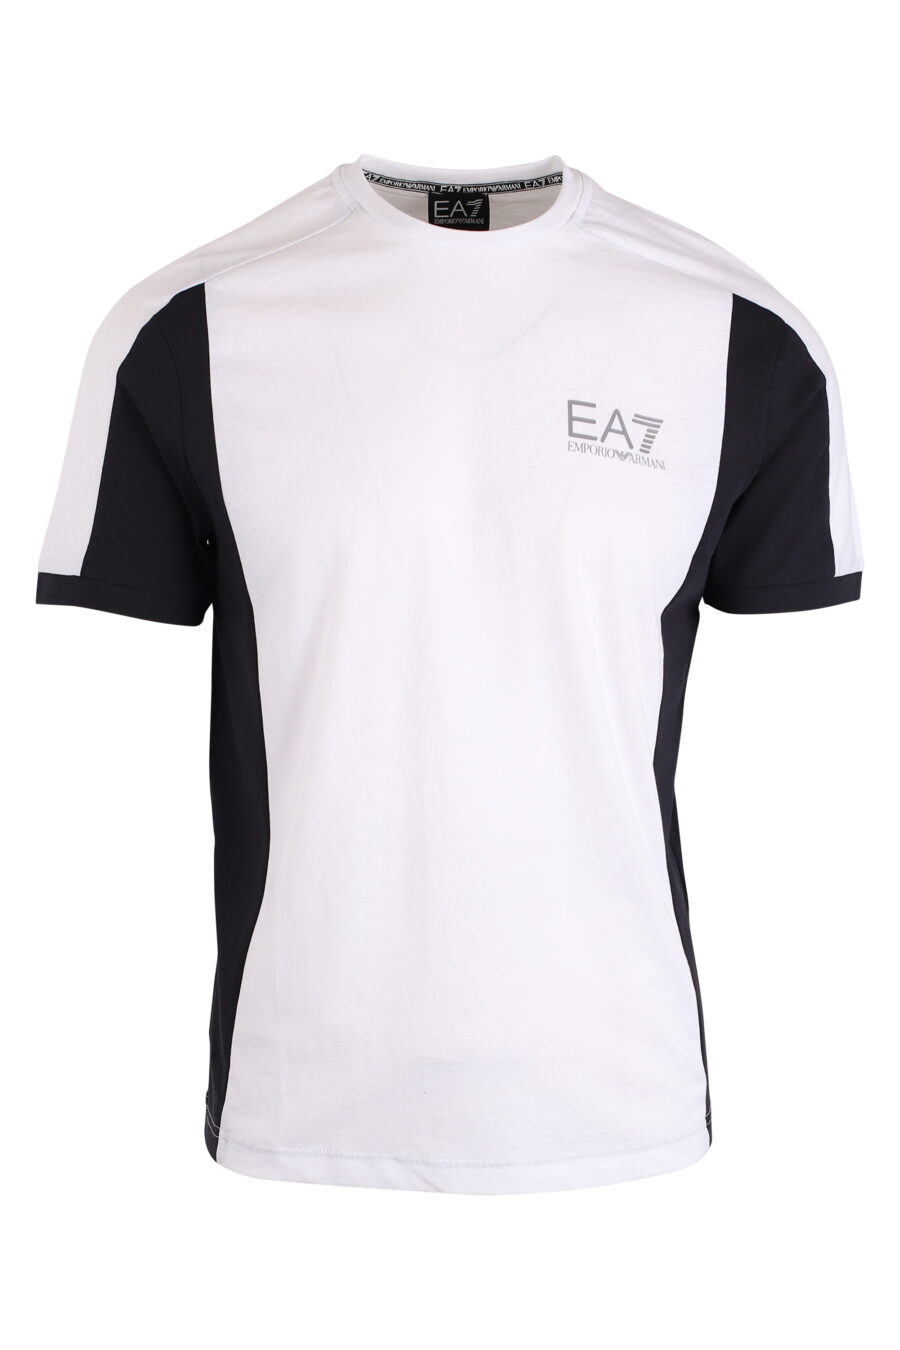 Camiseta blanca con mini logo "lux identity" - IMG 4203